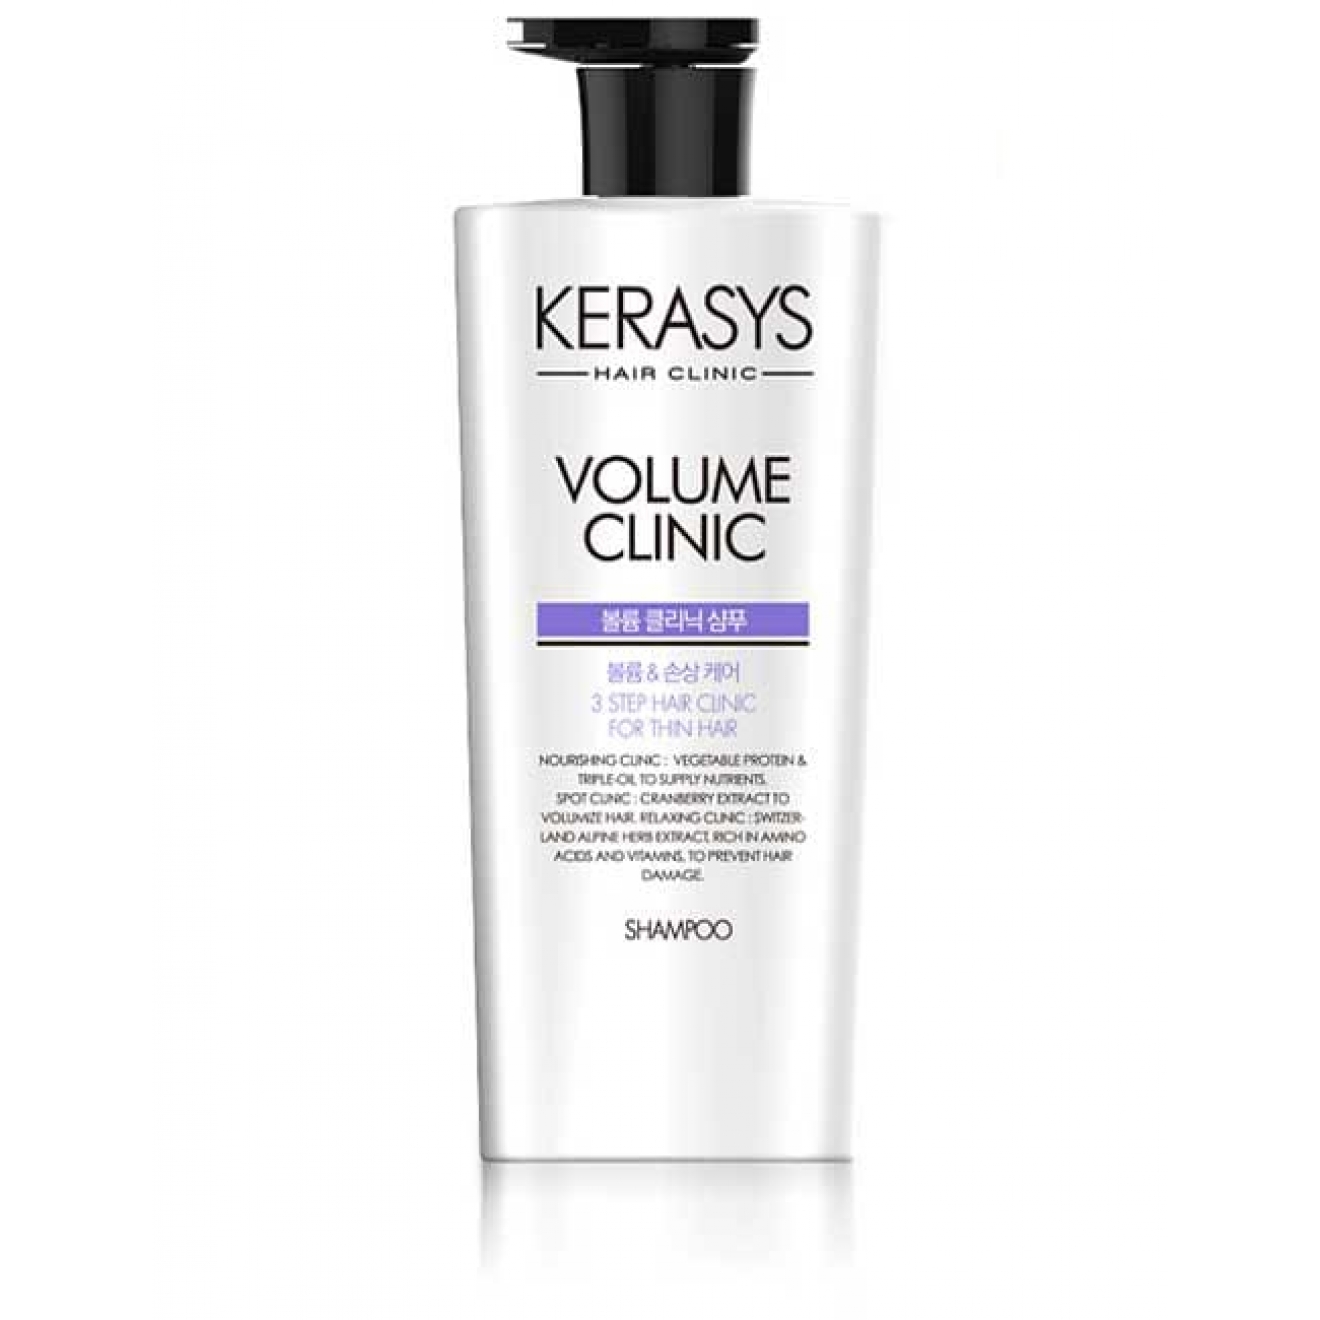 Kerasys Volume Clinic Shampoo 600ml